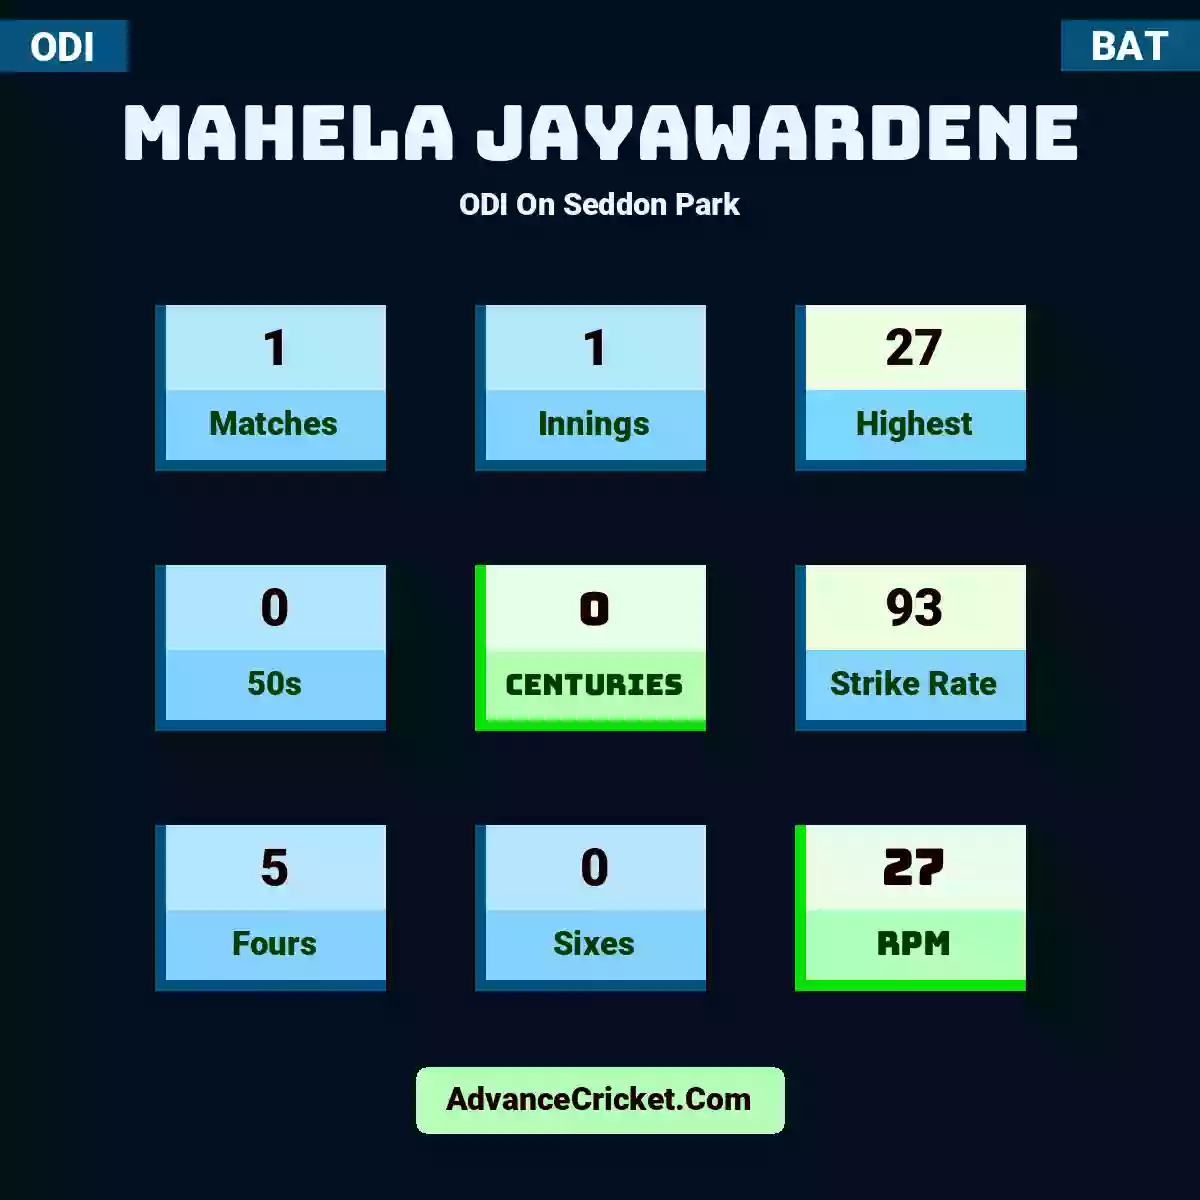 Mahela Jayawardene ODI  On Seddon Park, Mahela Jayawardene played 1 matches, scored 27 runs as highest, 0 half-centuries, and 0 centuries, with a strike rate of 93. M.Jayawardene hit 5 fours and 0 sixes, with an RPM of 27.